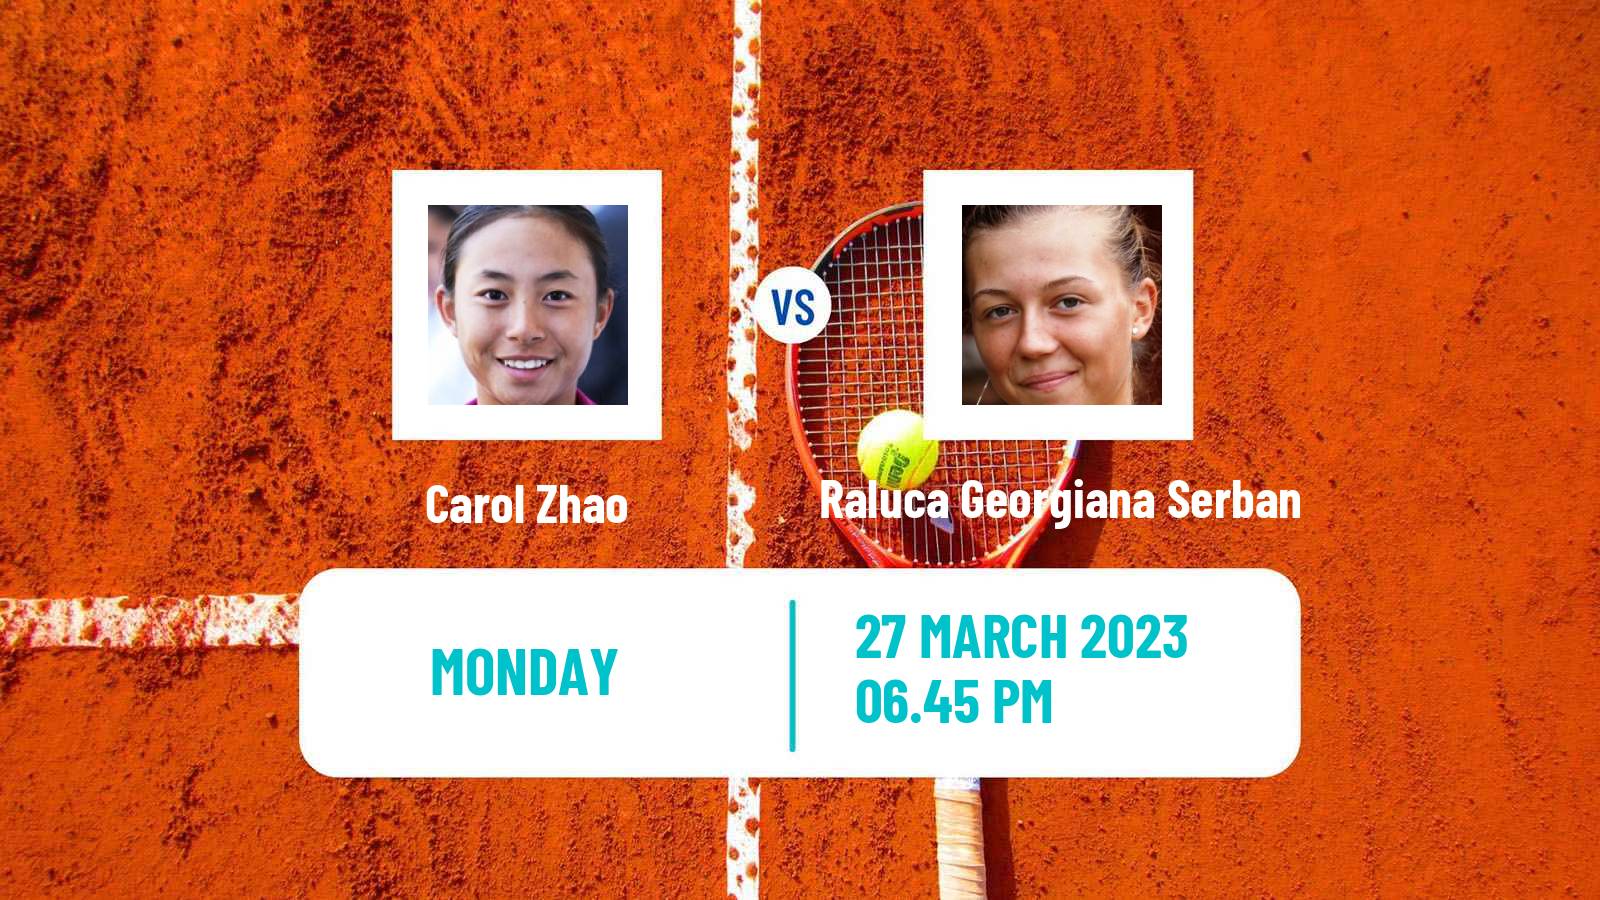 Tennis ATP Challenger Carol Zhao - Raluca Georgiana Serban